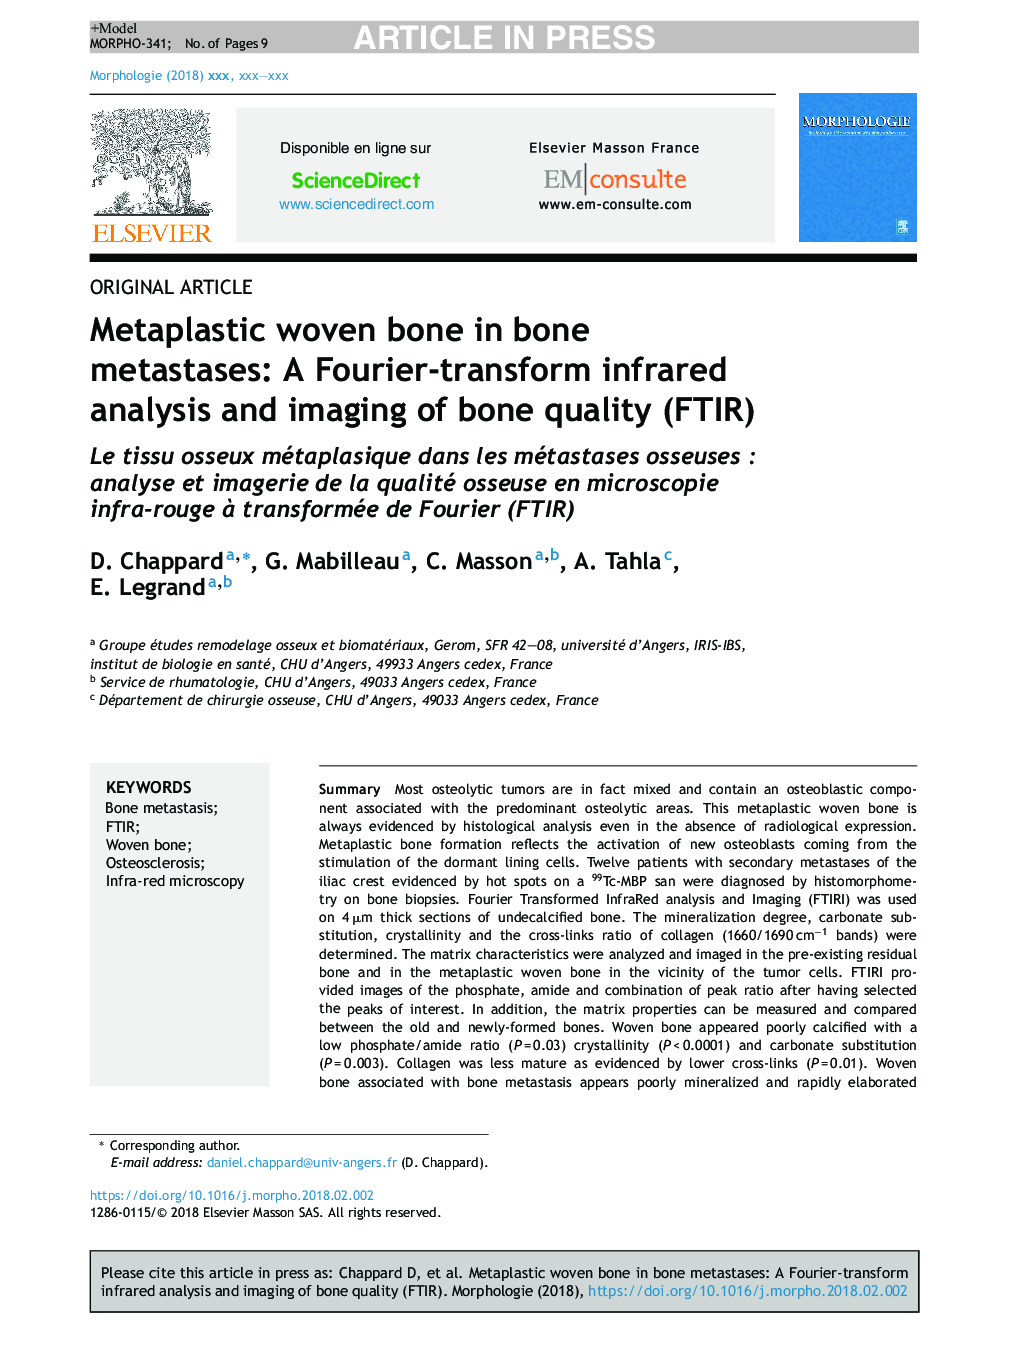 Metaplastic woven bone in bone metastases: A Fourier-transform infrared analysis and imaging of bone quality (FTIR)